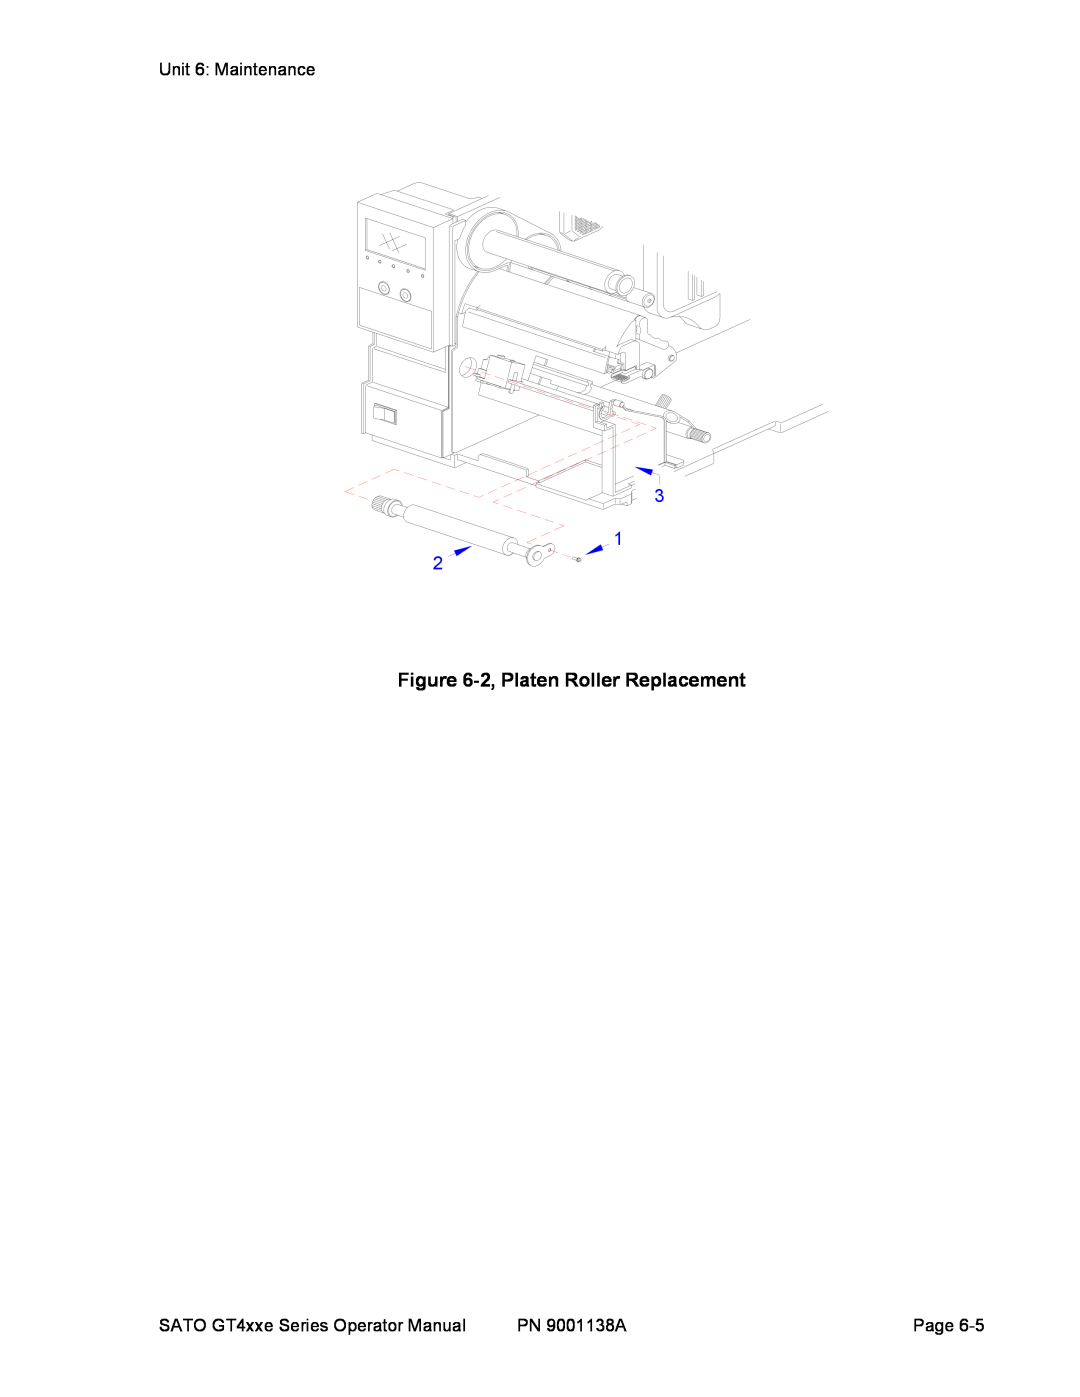 SATO GT 424e manual 2, Platen Roller Replacement, Unit 6 Maintenance, SATO GT4xxe Series Operator Manual, PN 9001138A, Page 